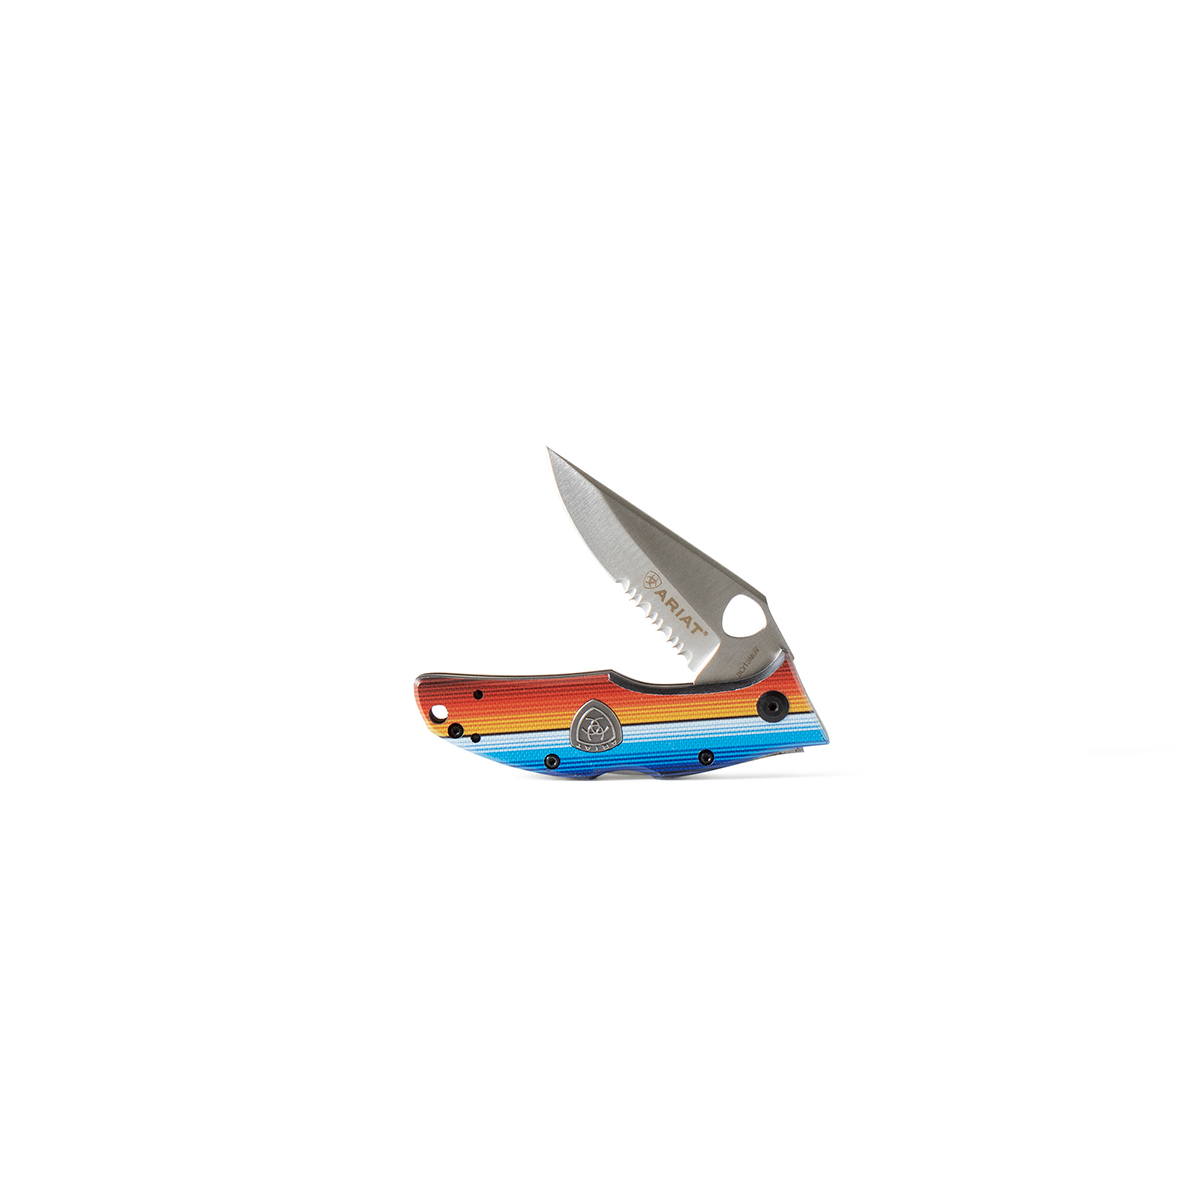 Ariat 3" Hybrid Knife - Serape